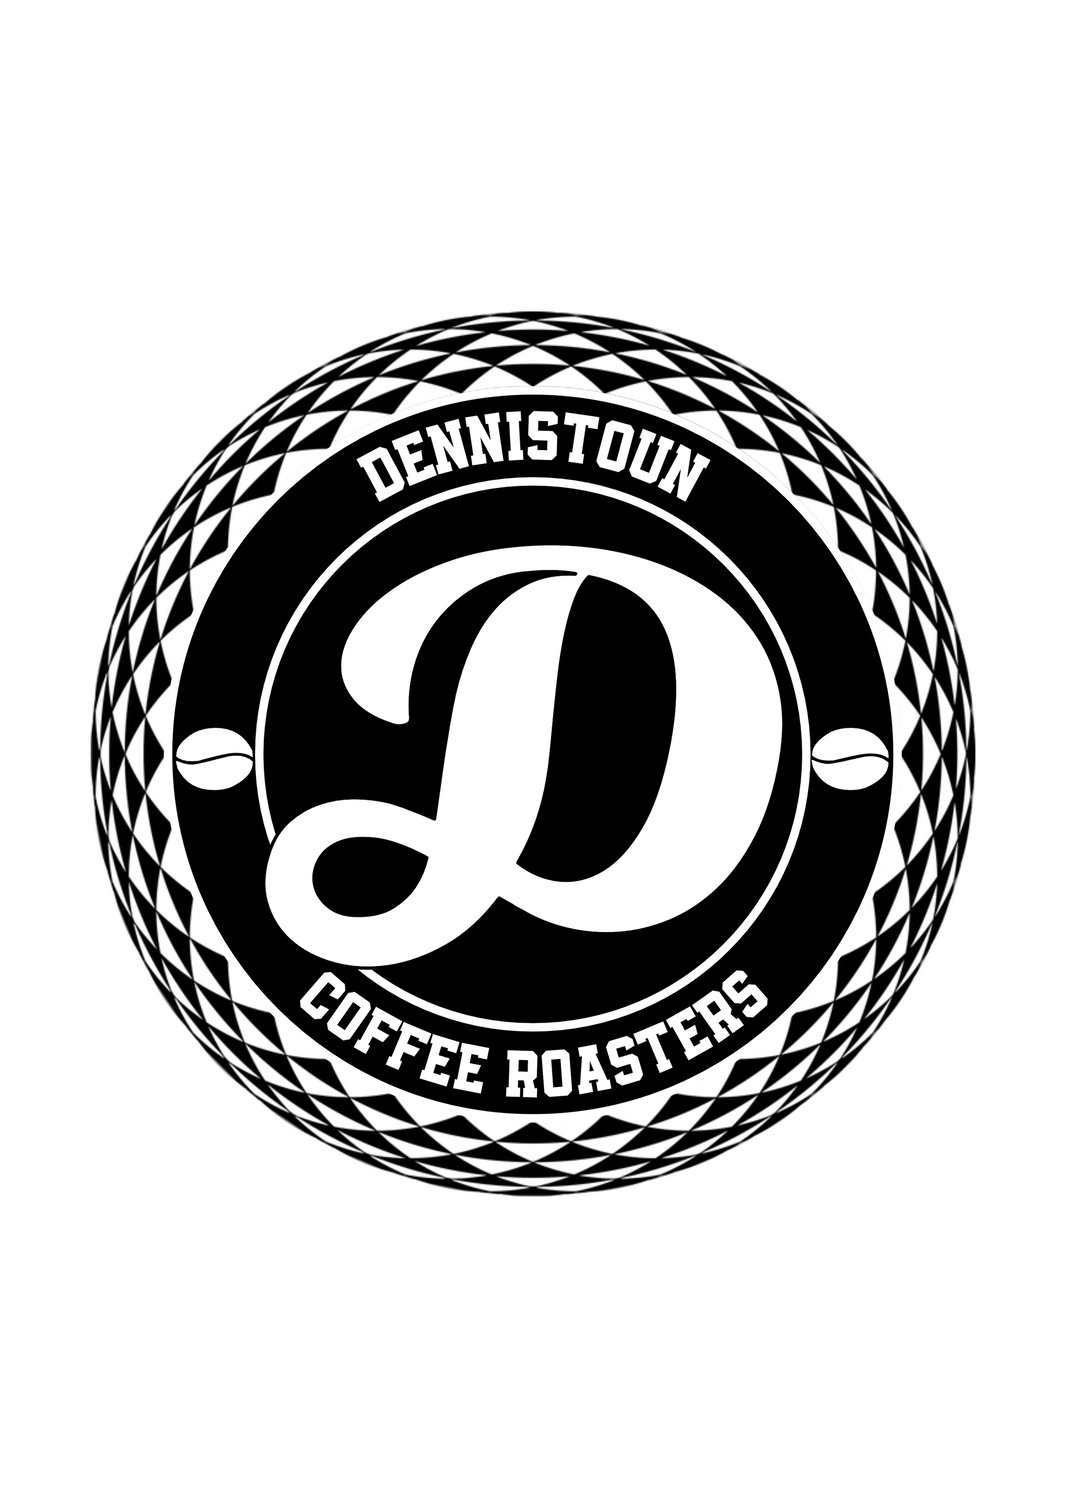 Dennistoun Coffee Roasters Home